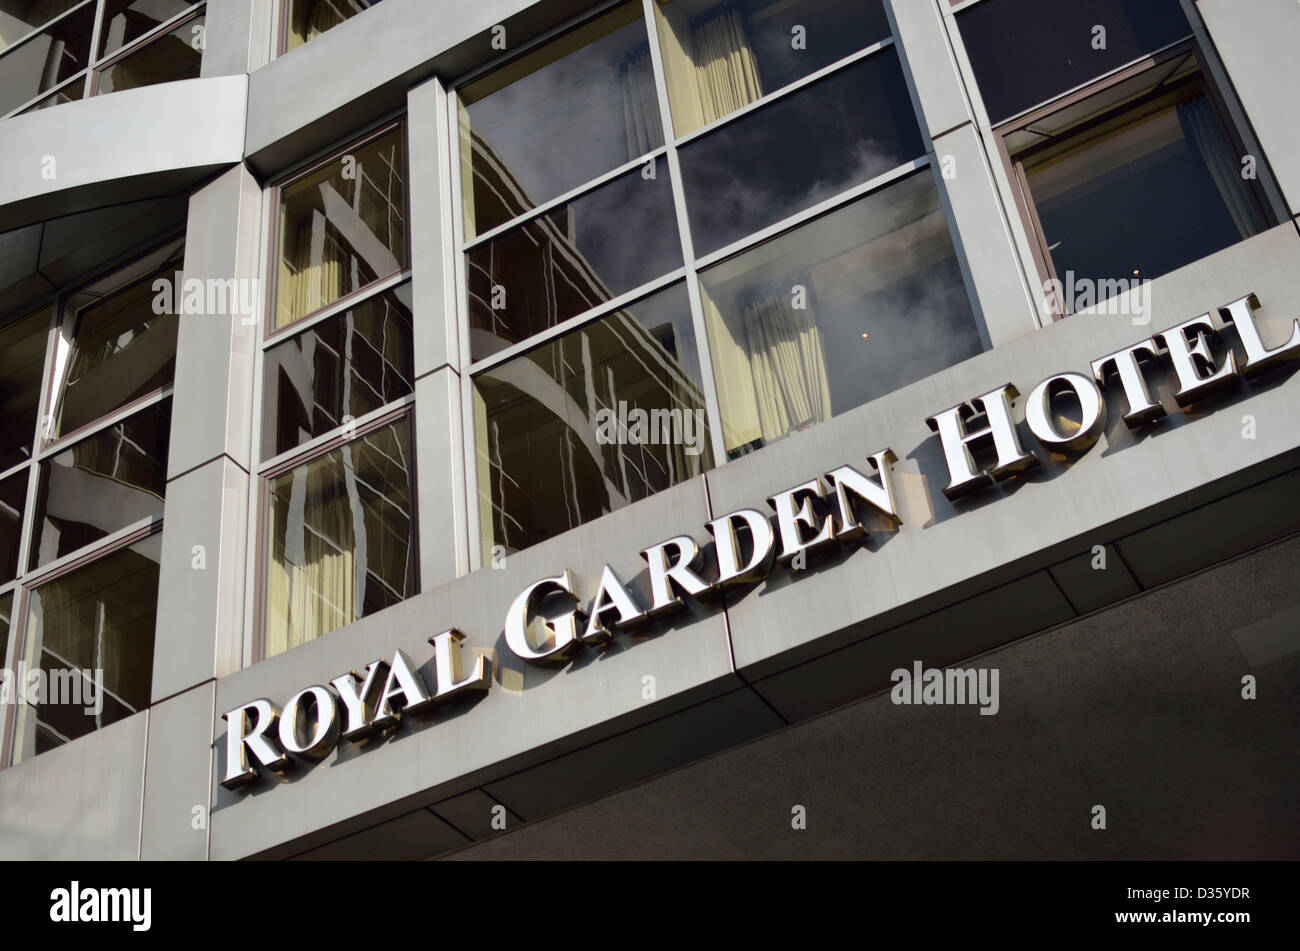 The Royal Garden Hotel in Kensington, London, UK Stock Photo